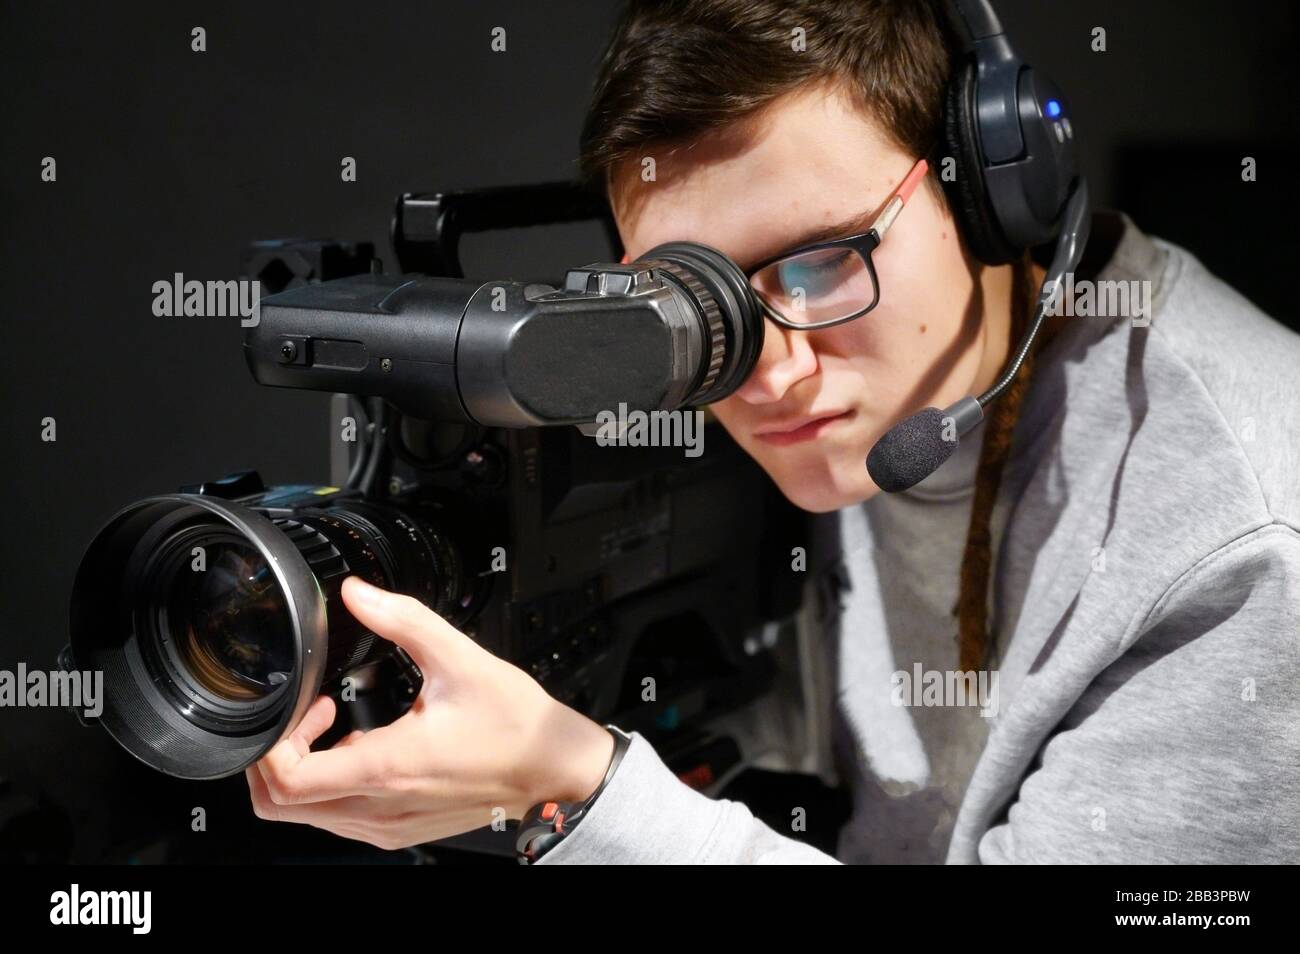 Cameraman using professional digital video camera. Stock Photo